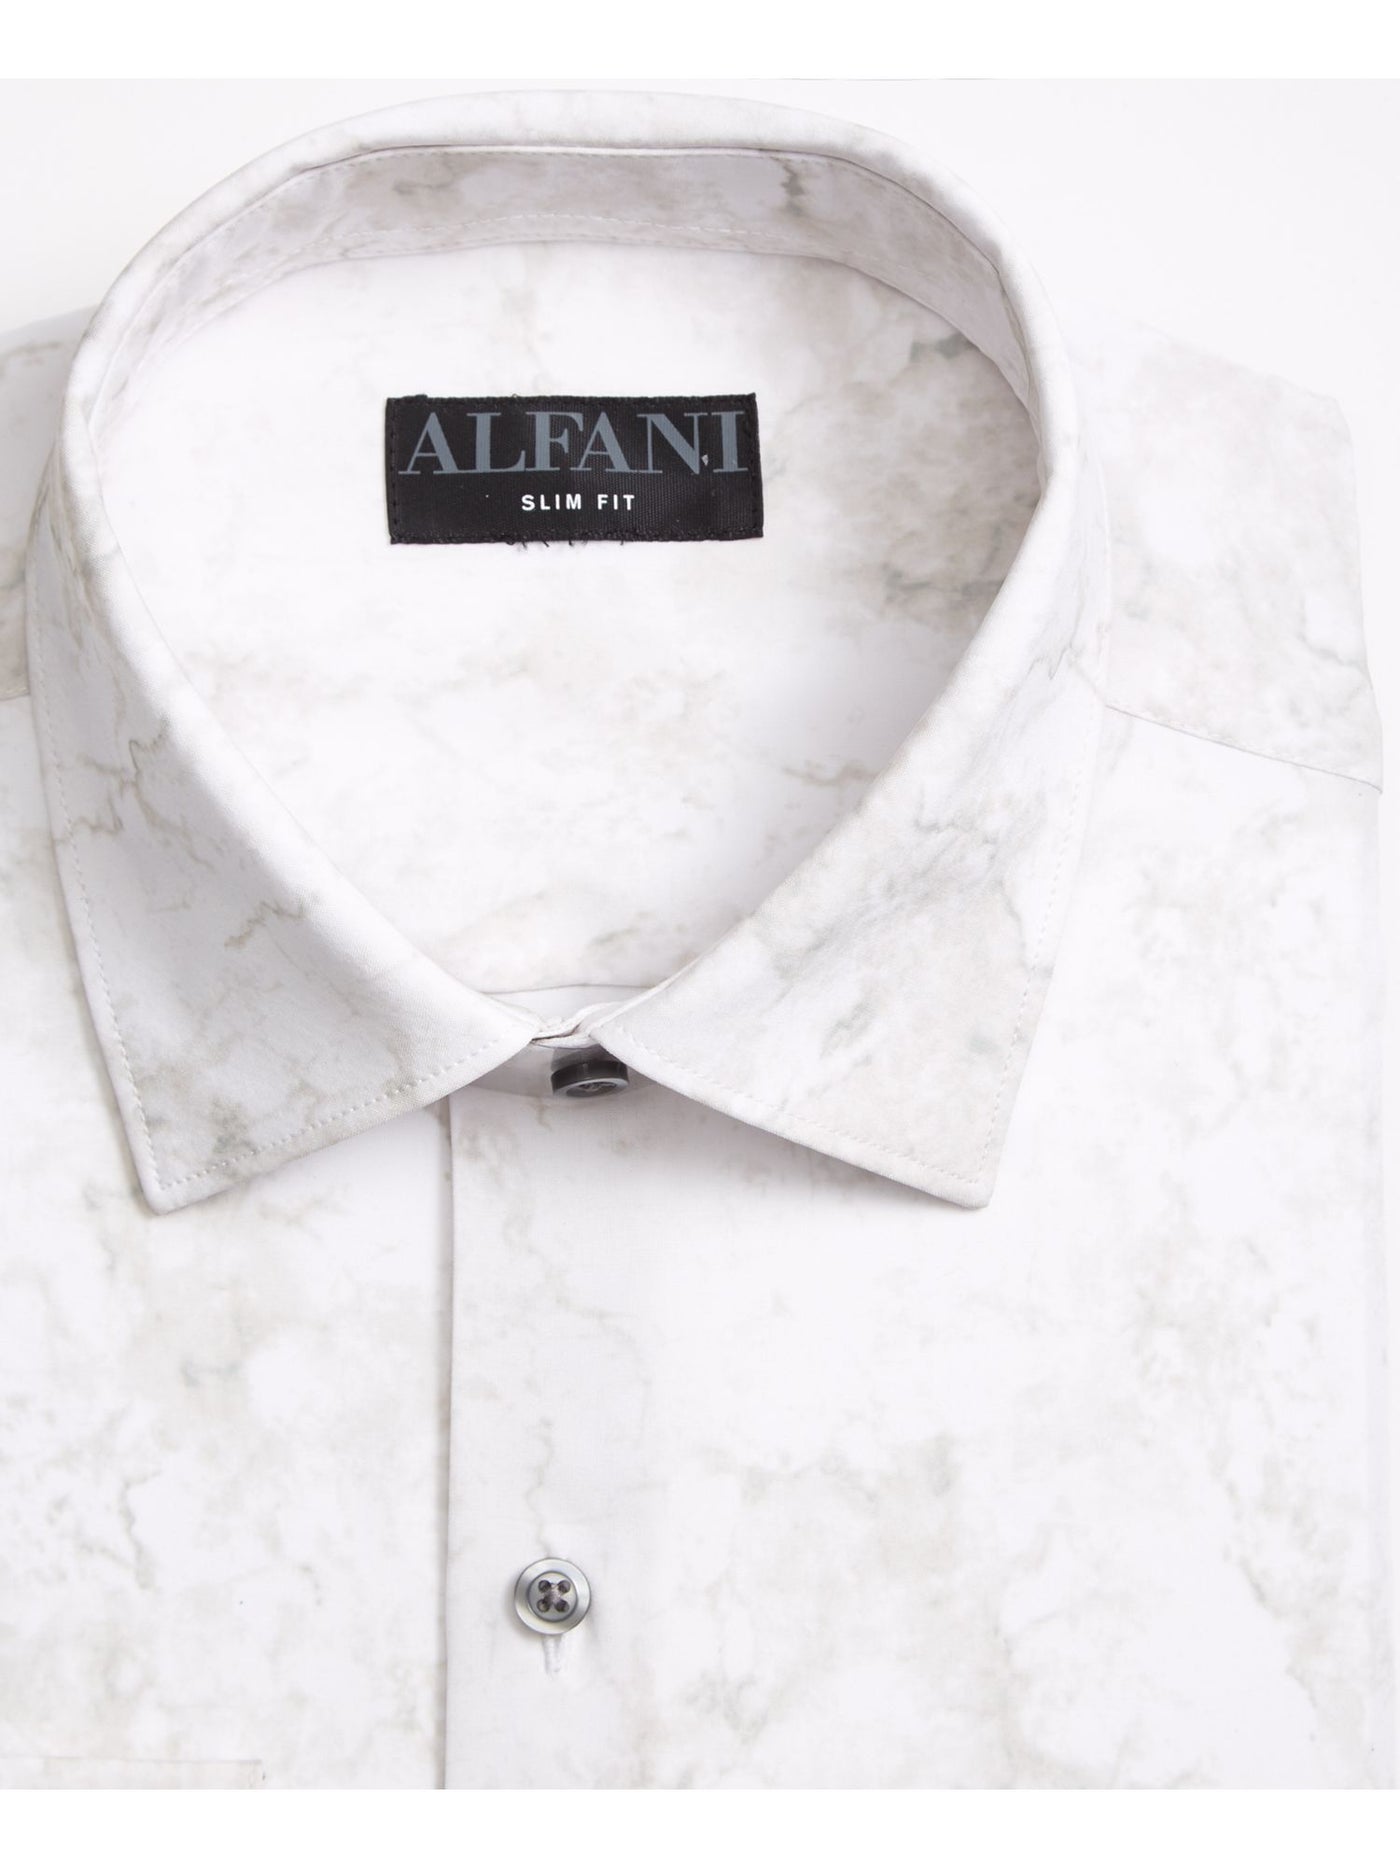 ALFANI Mens White Collared Slim Fit Shirt 14 14.5 32-33